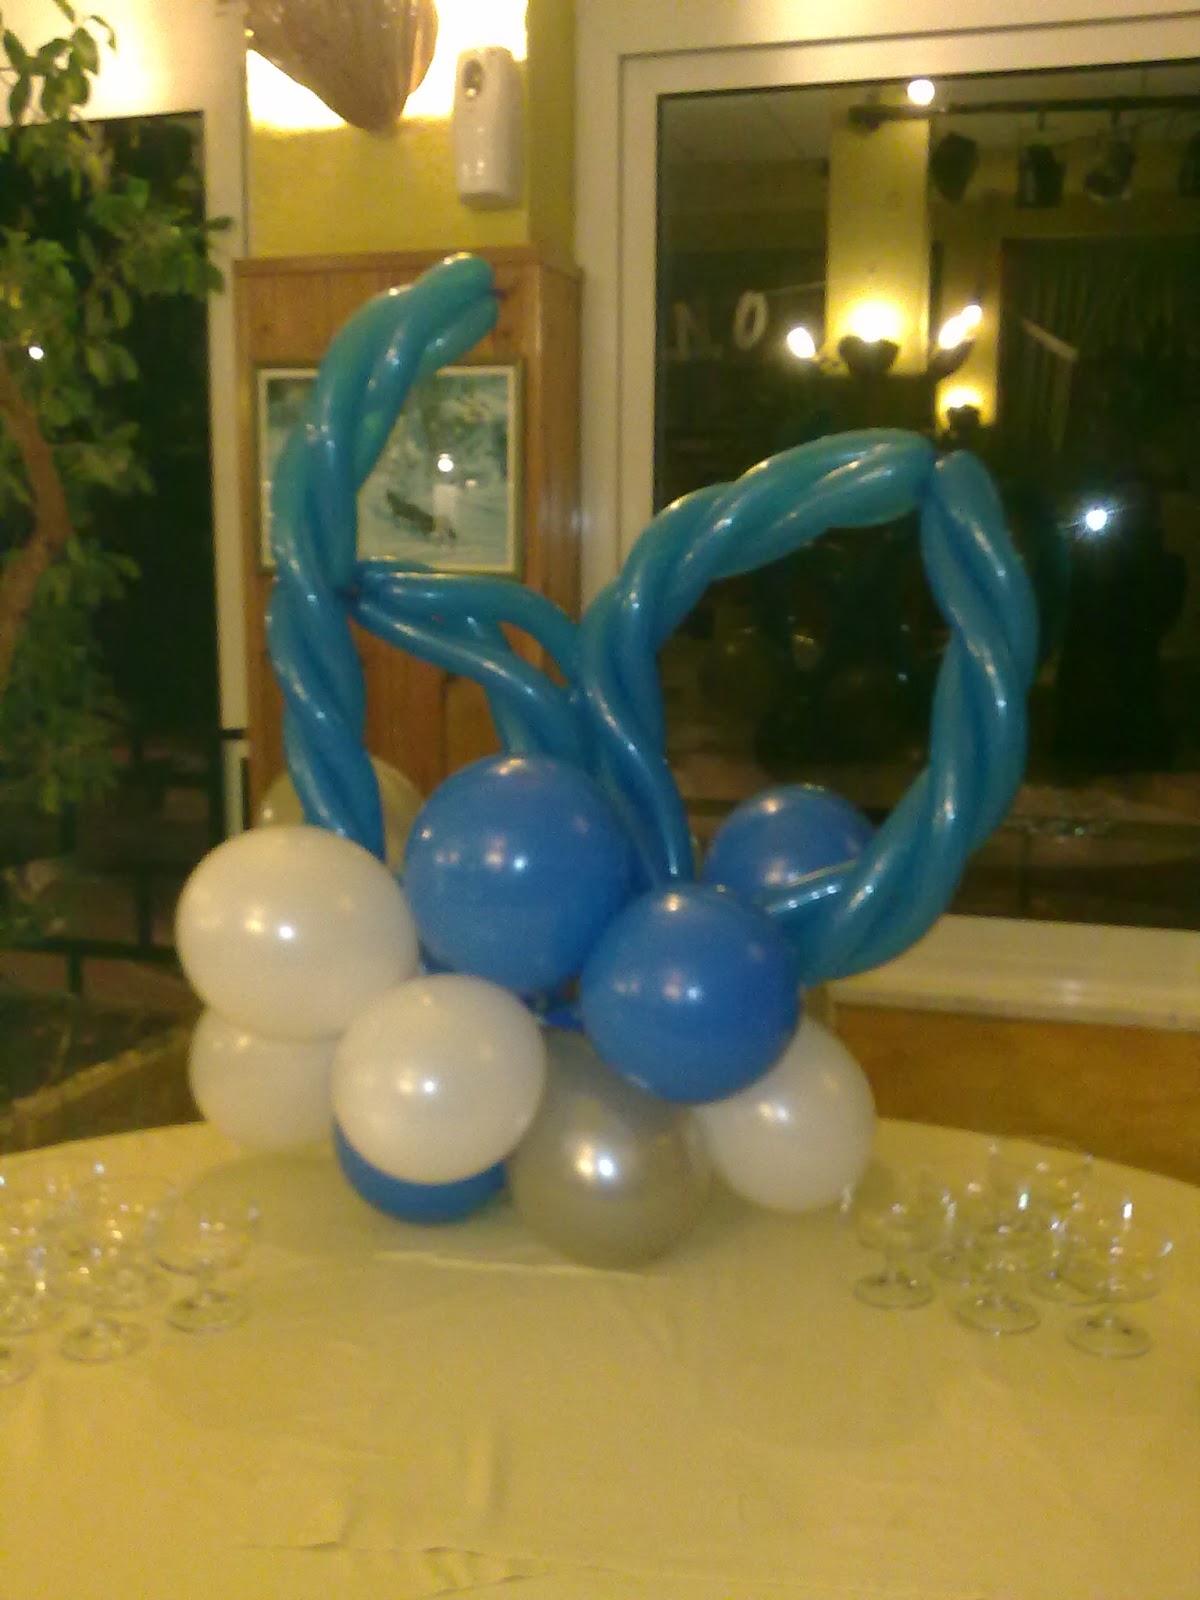 LV balloon art: COMPLEANNO 60 anni